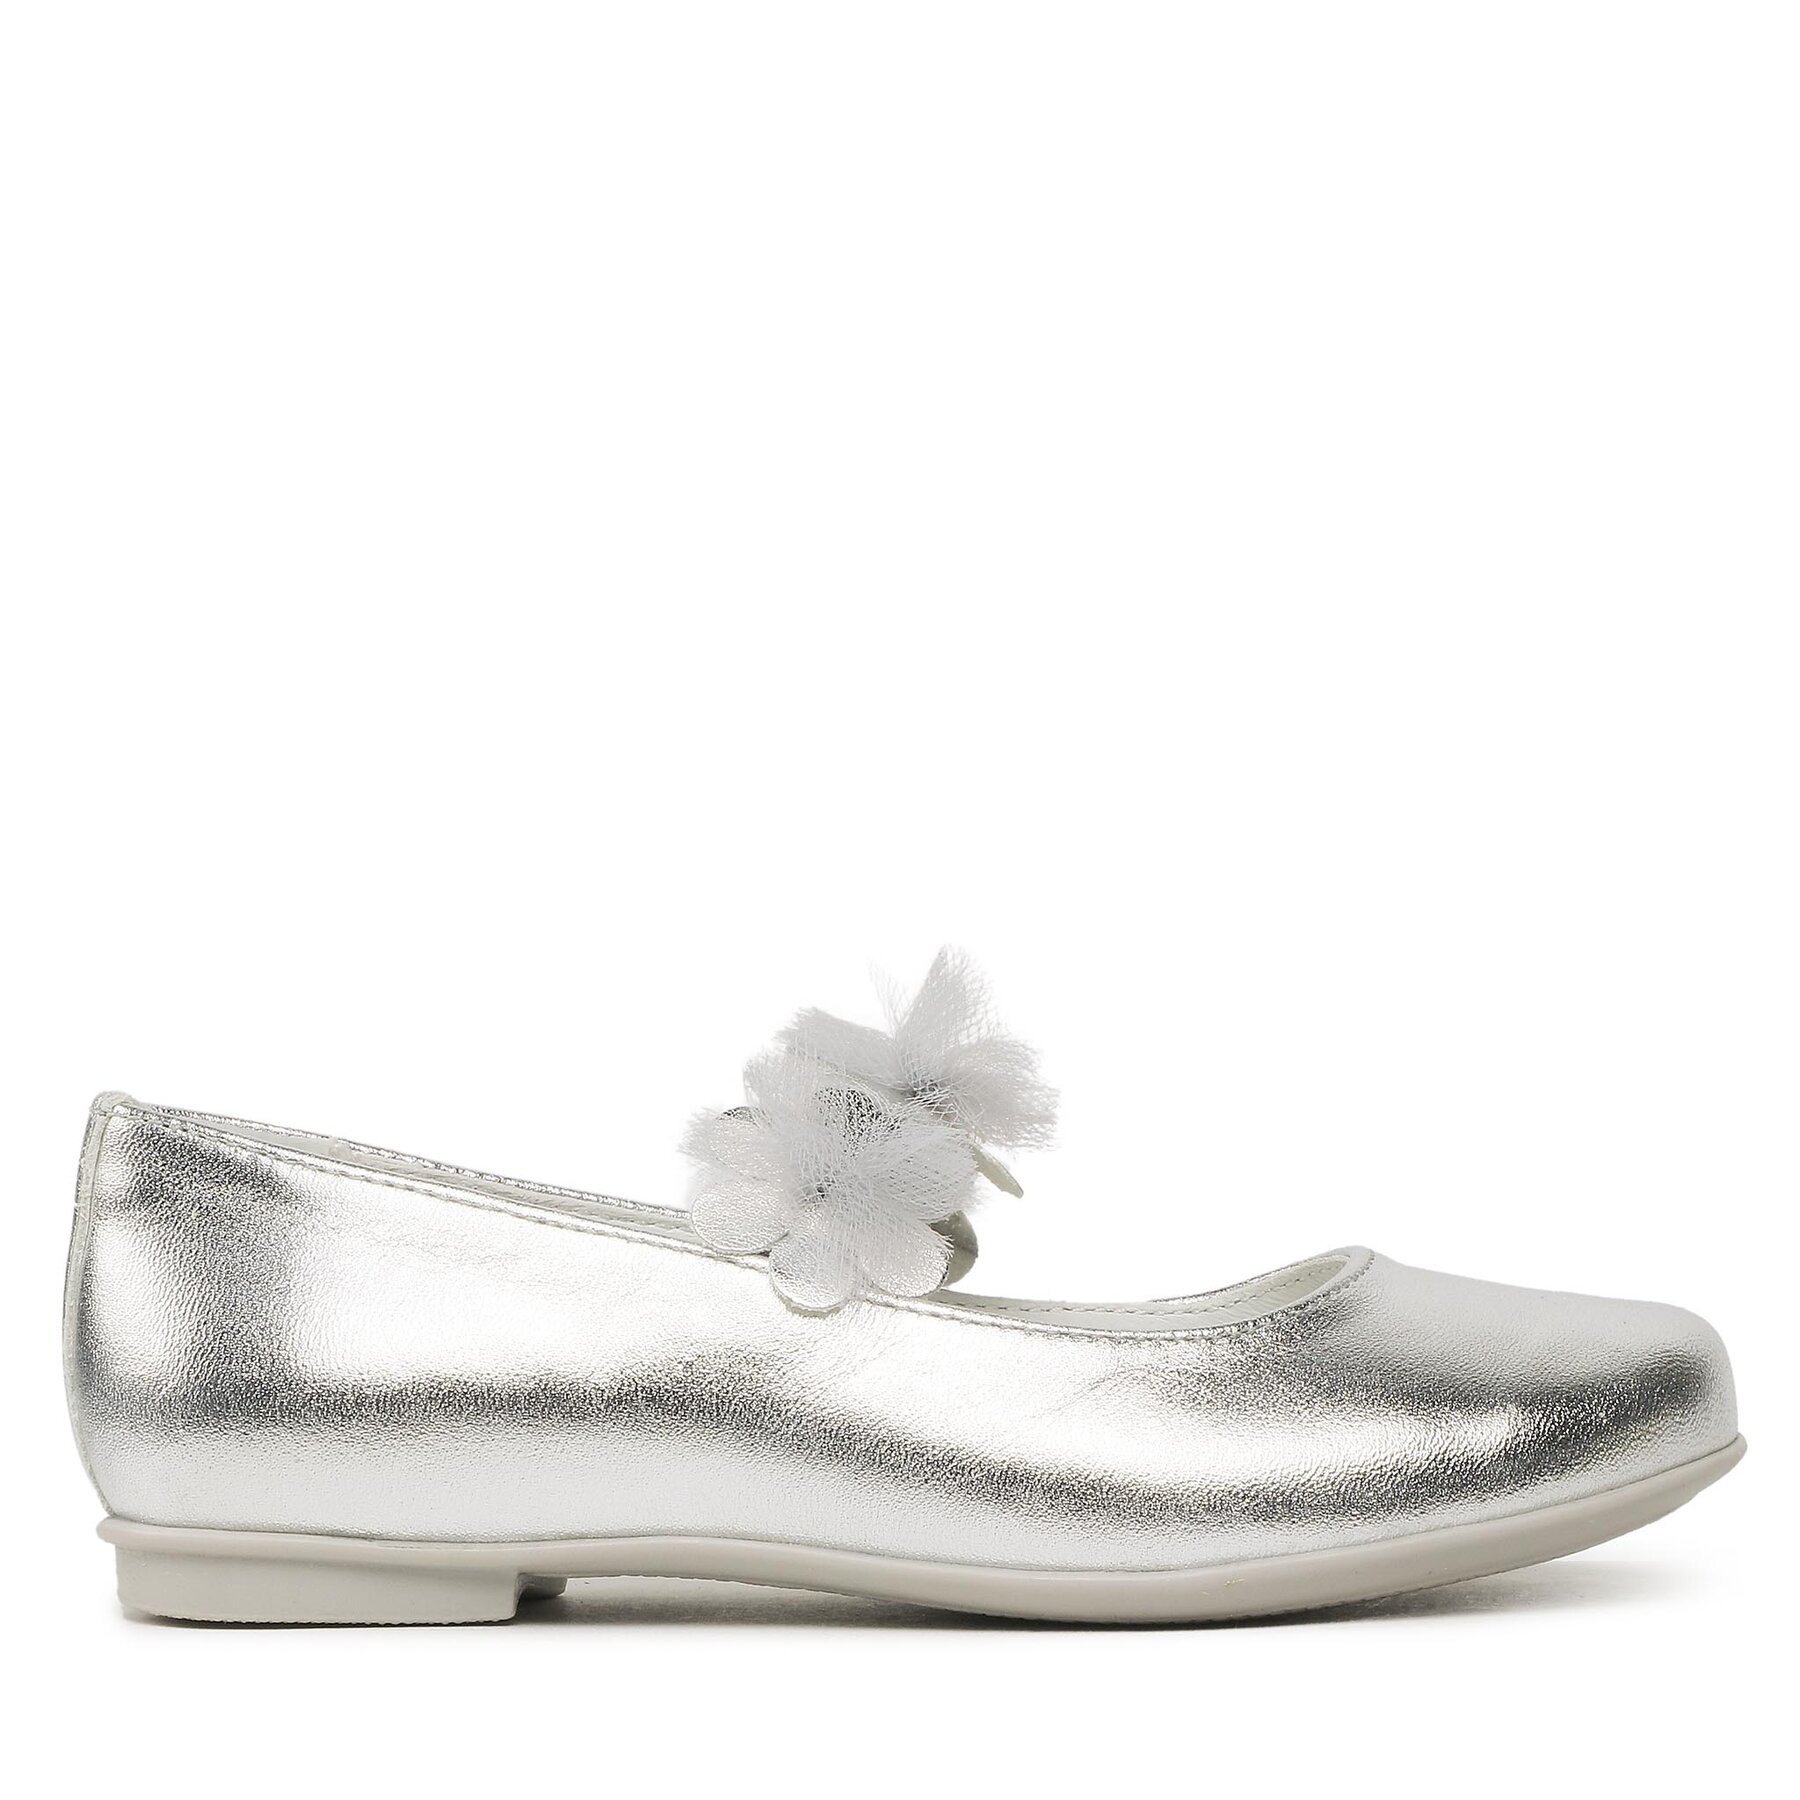 Cipele Primigi 3920322 S Silver